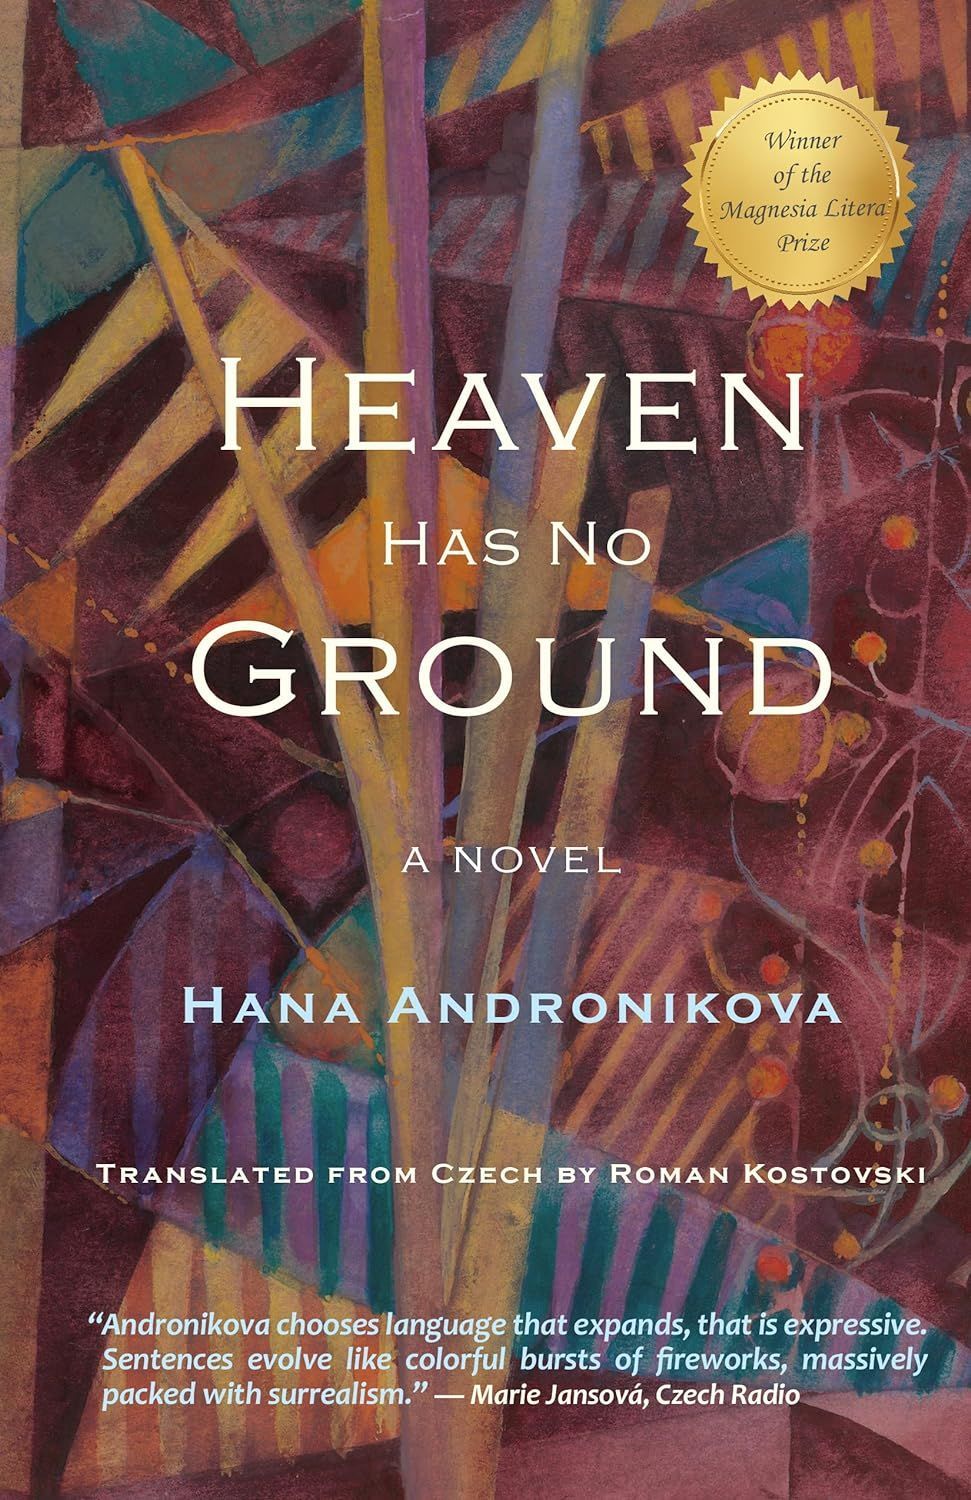 Relax, Set Yourself Free: On Hana Andronikova’s “Heaven Has No Ground”